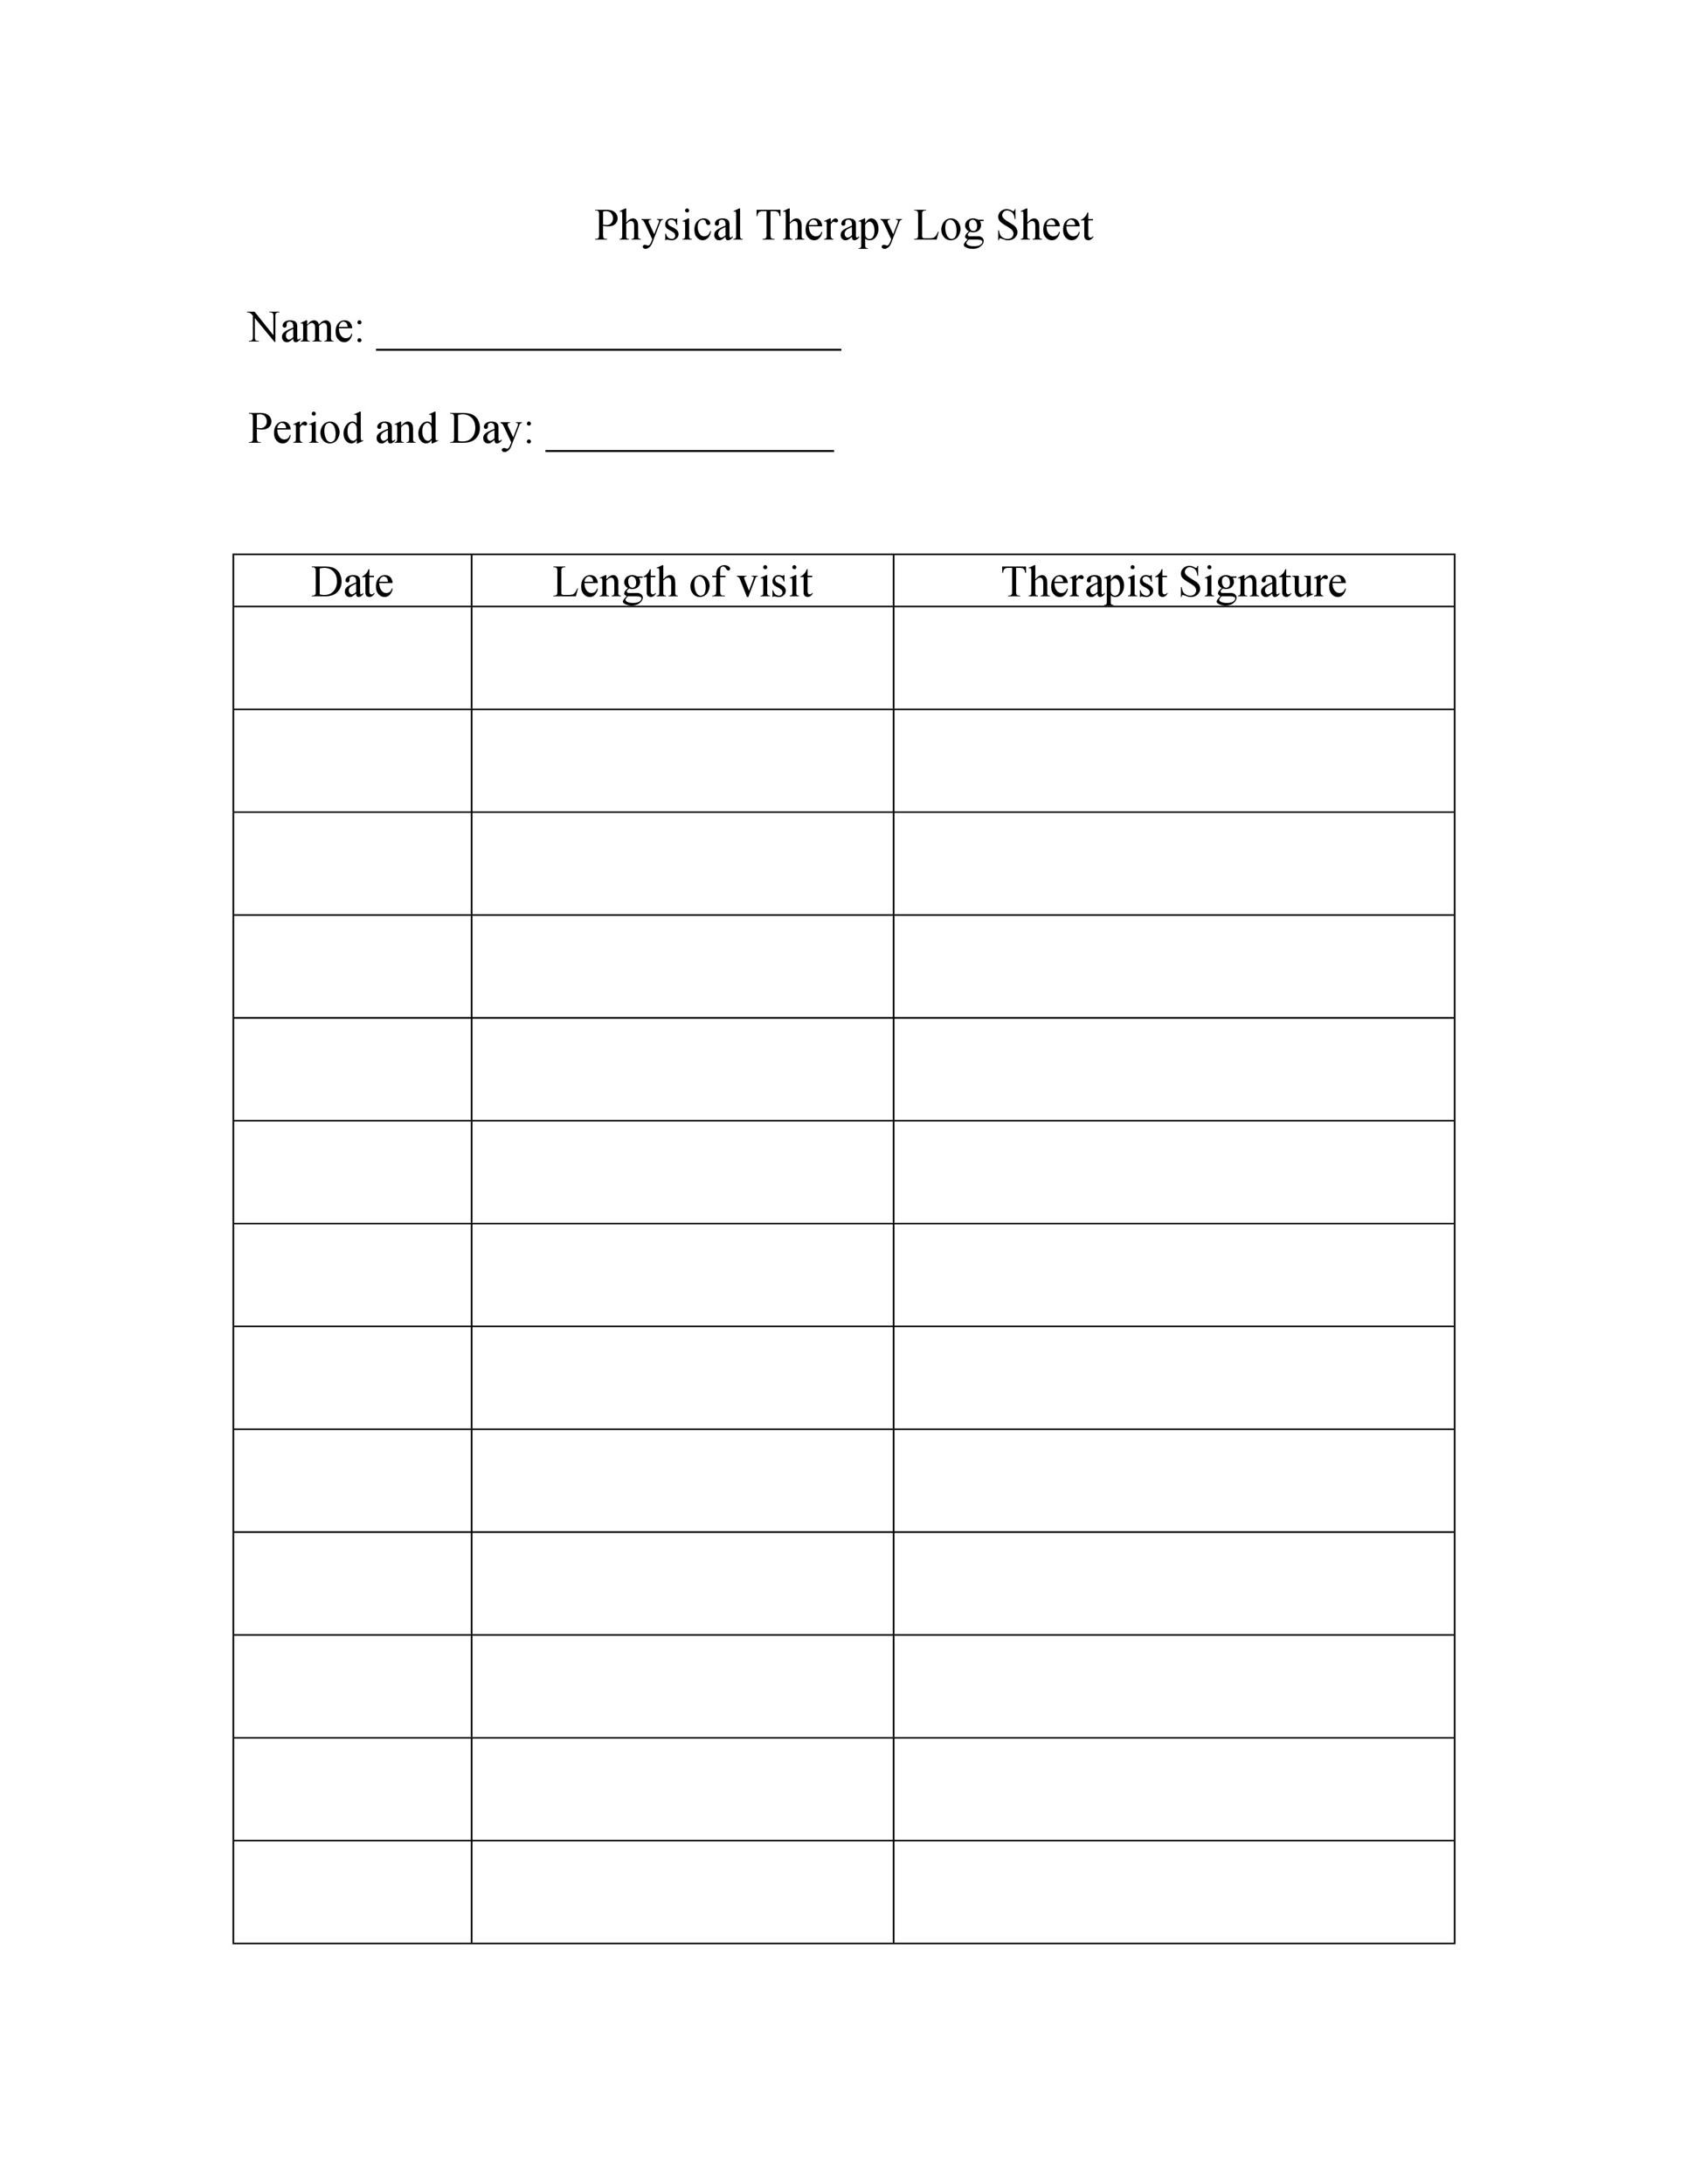 50 Printable Log Sheet Templates Direct Download ᐅ Templatelab